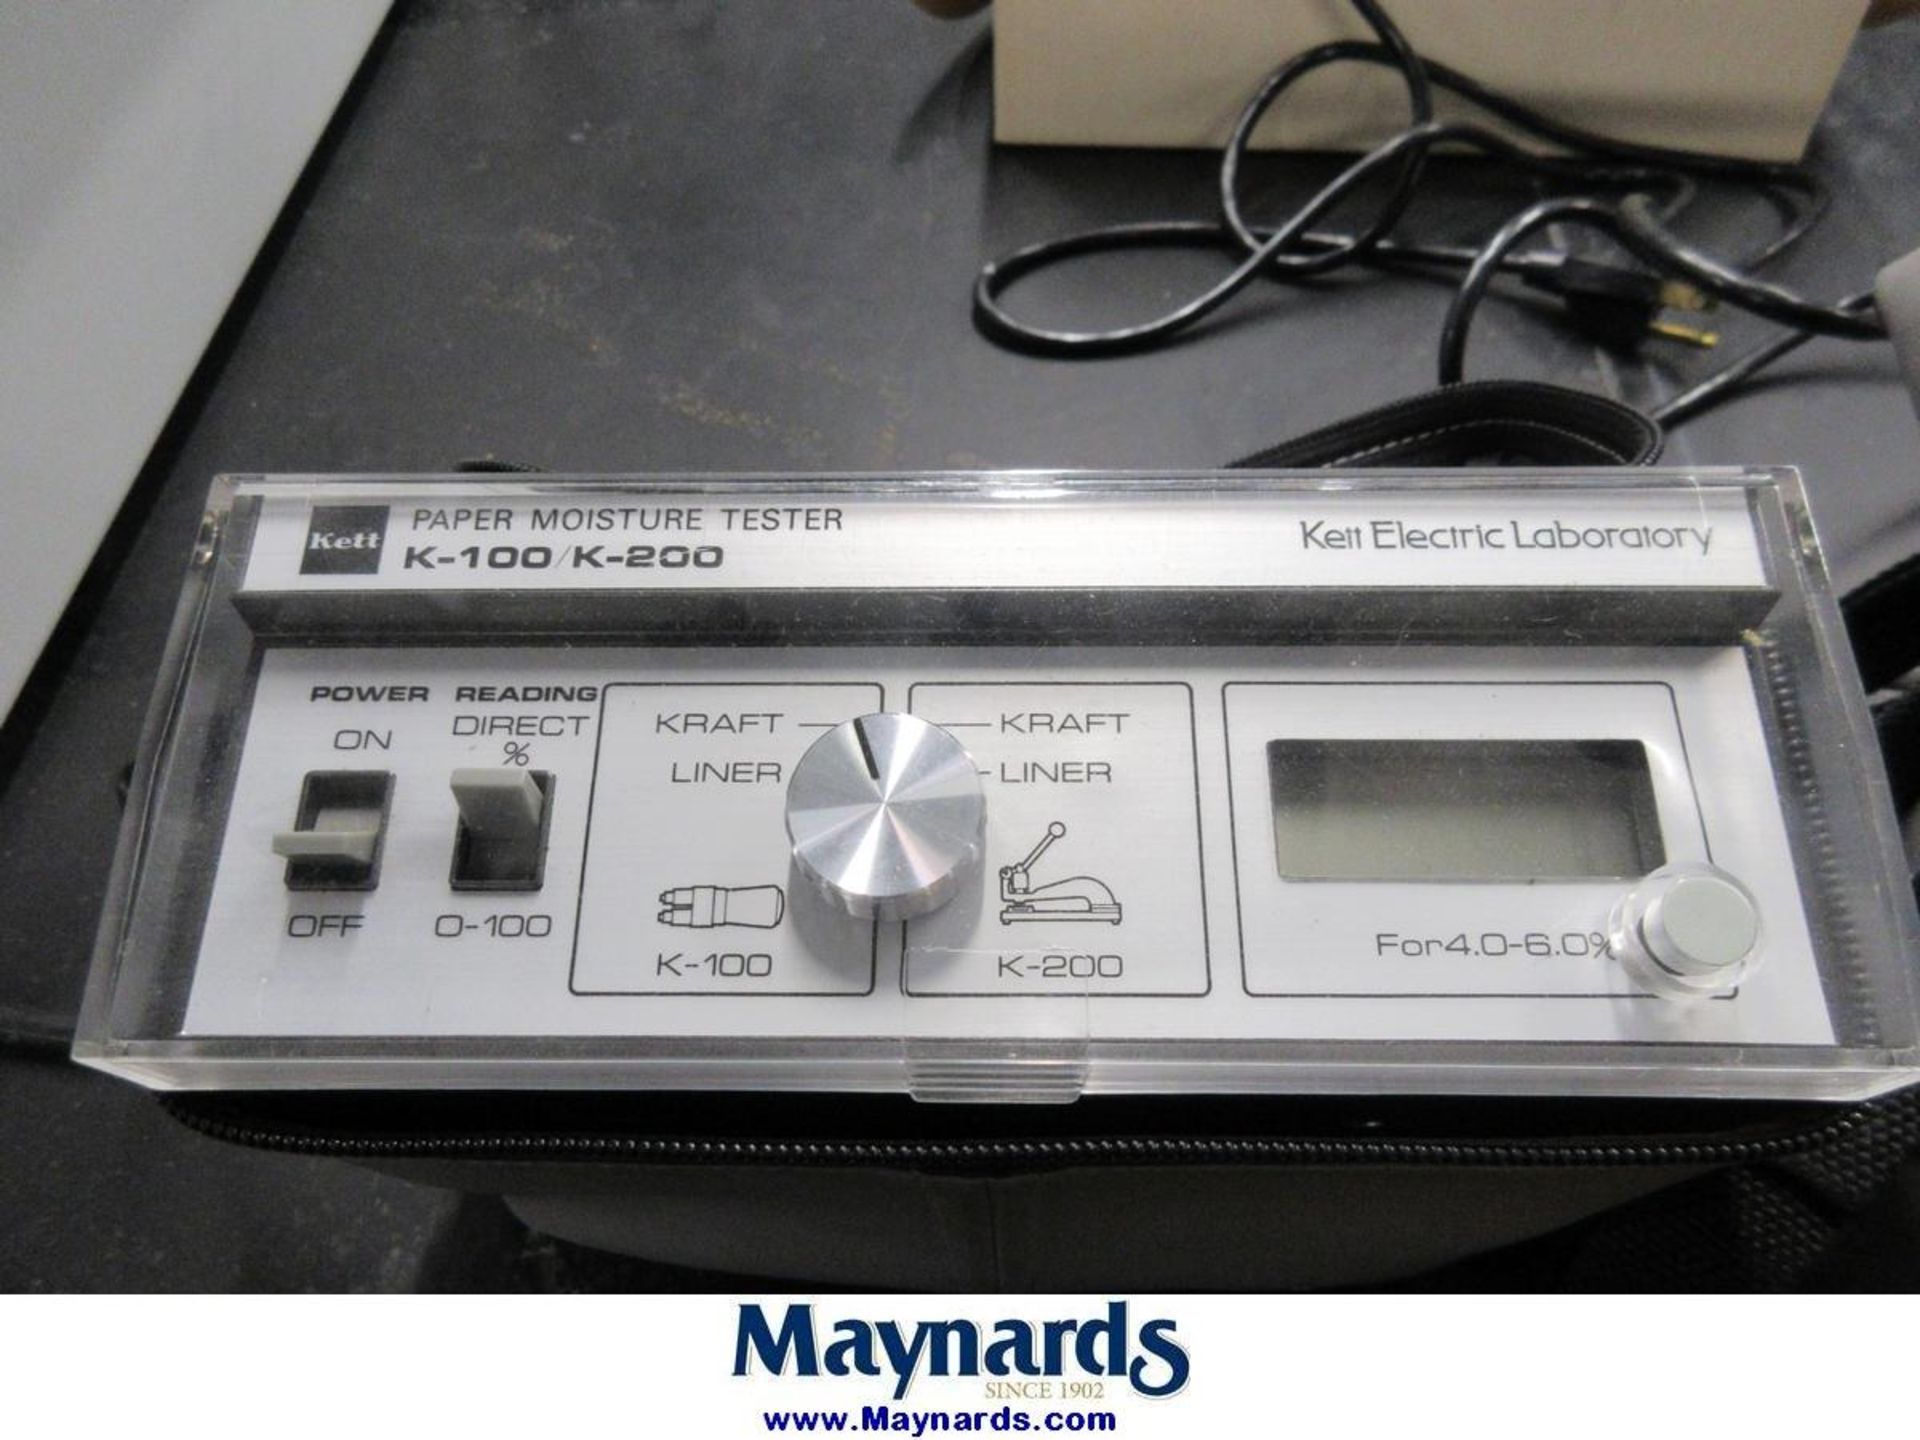 Kett Electric Laboratory K100/K200 Paper Moisture Testers - Image 4 of 5